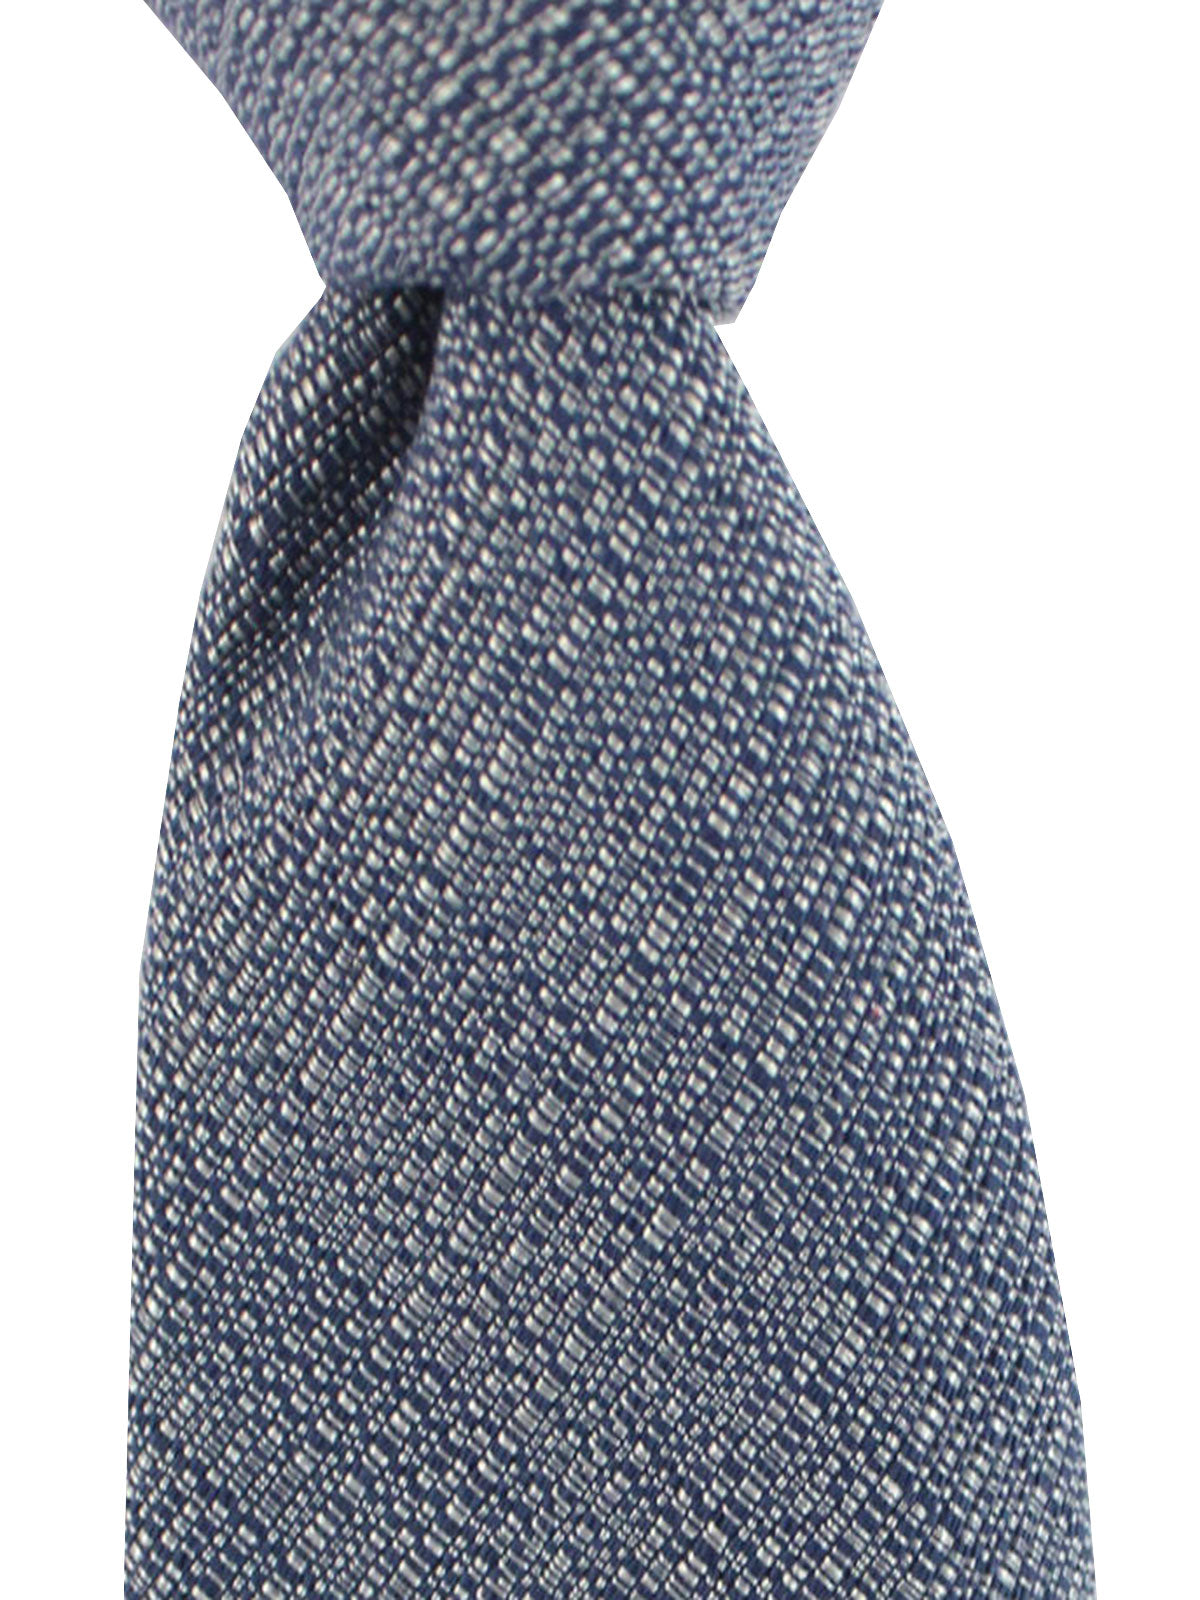 Massimo Valeri Extra Long Tie Gray Textured Hand Made In Italy